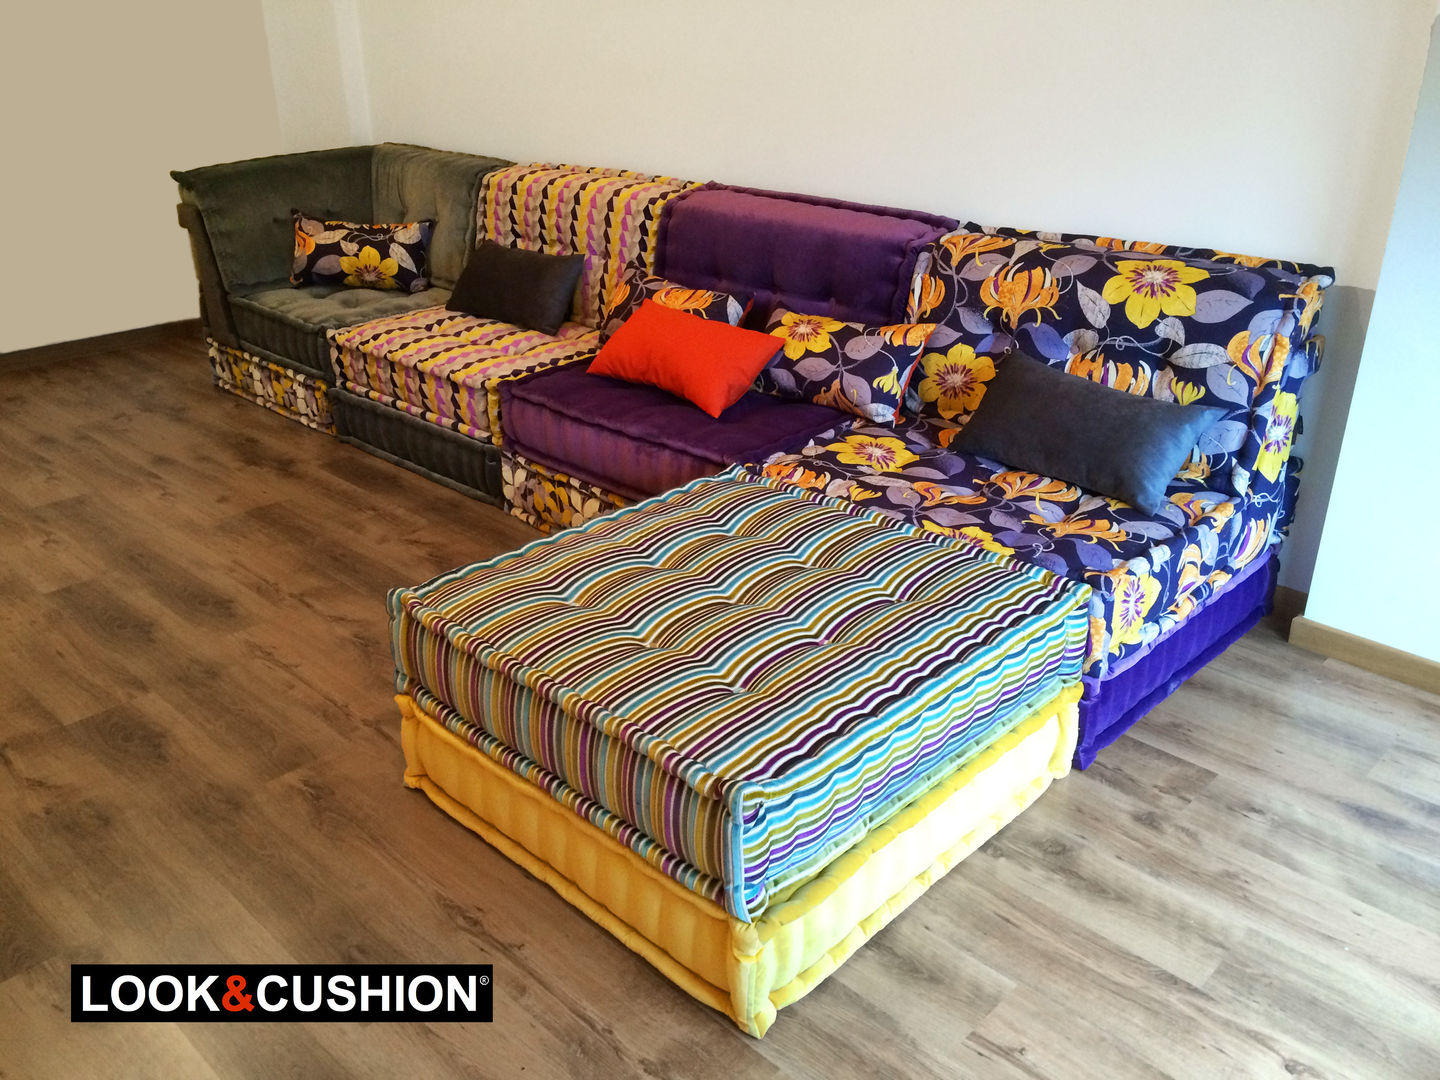 Sofá modular modelo "Craft" - Arcade - Galicia, LOOK & CUSHION LOOK & CUSHION Living room Sofas & armchairs